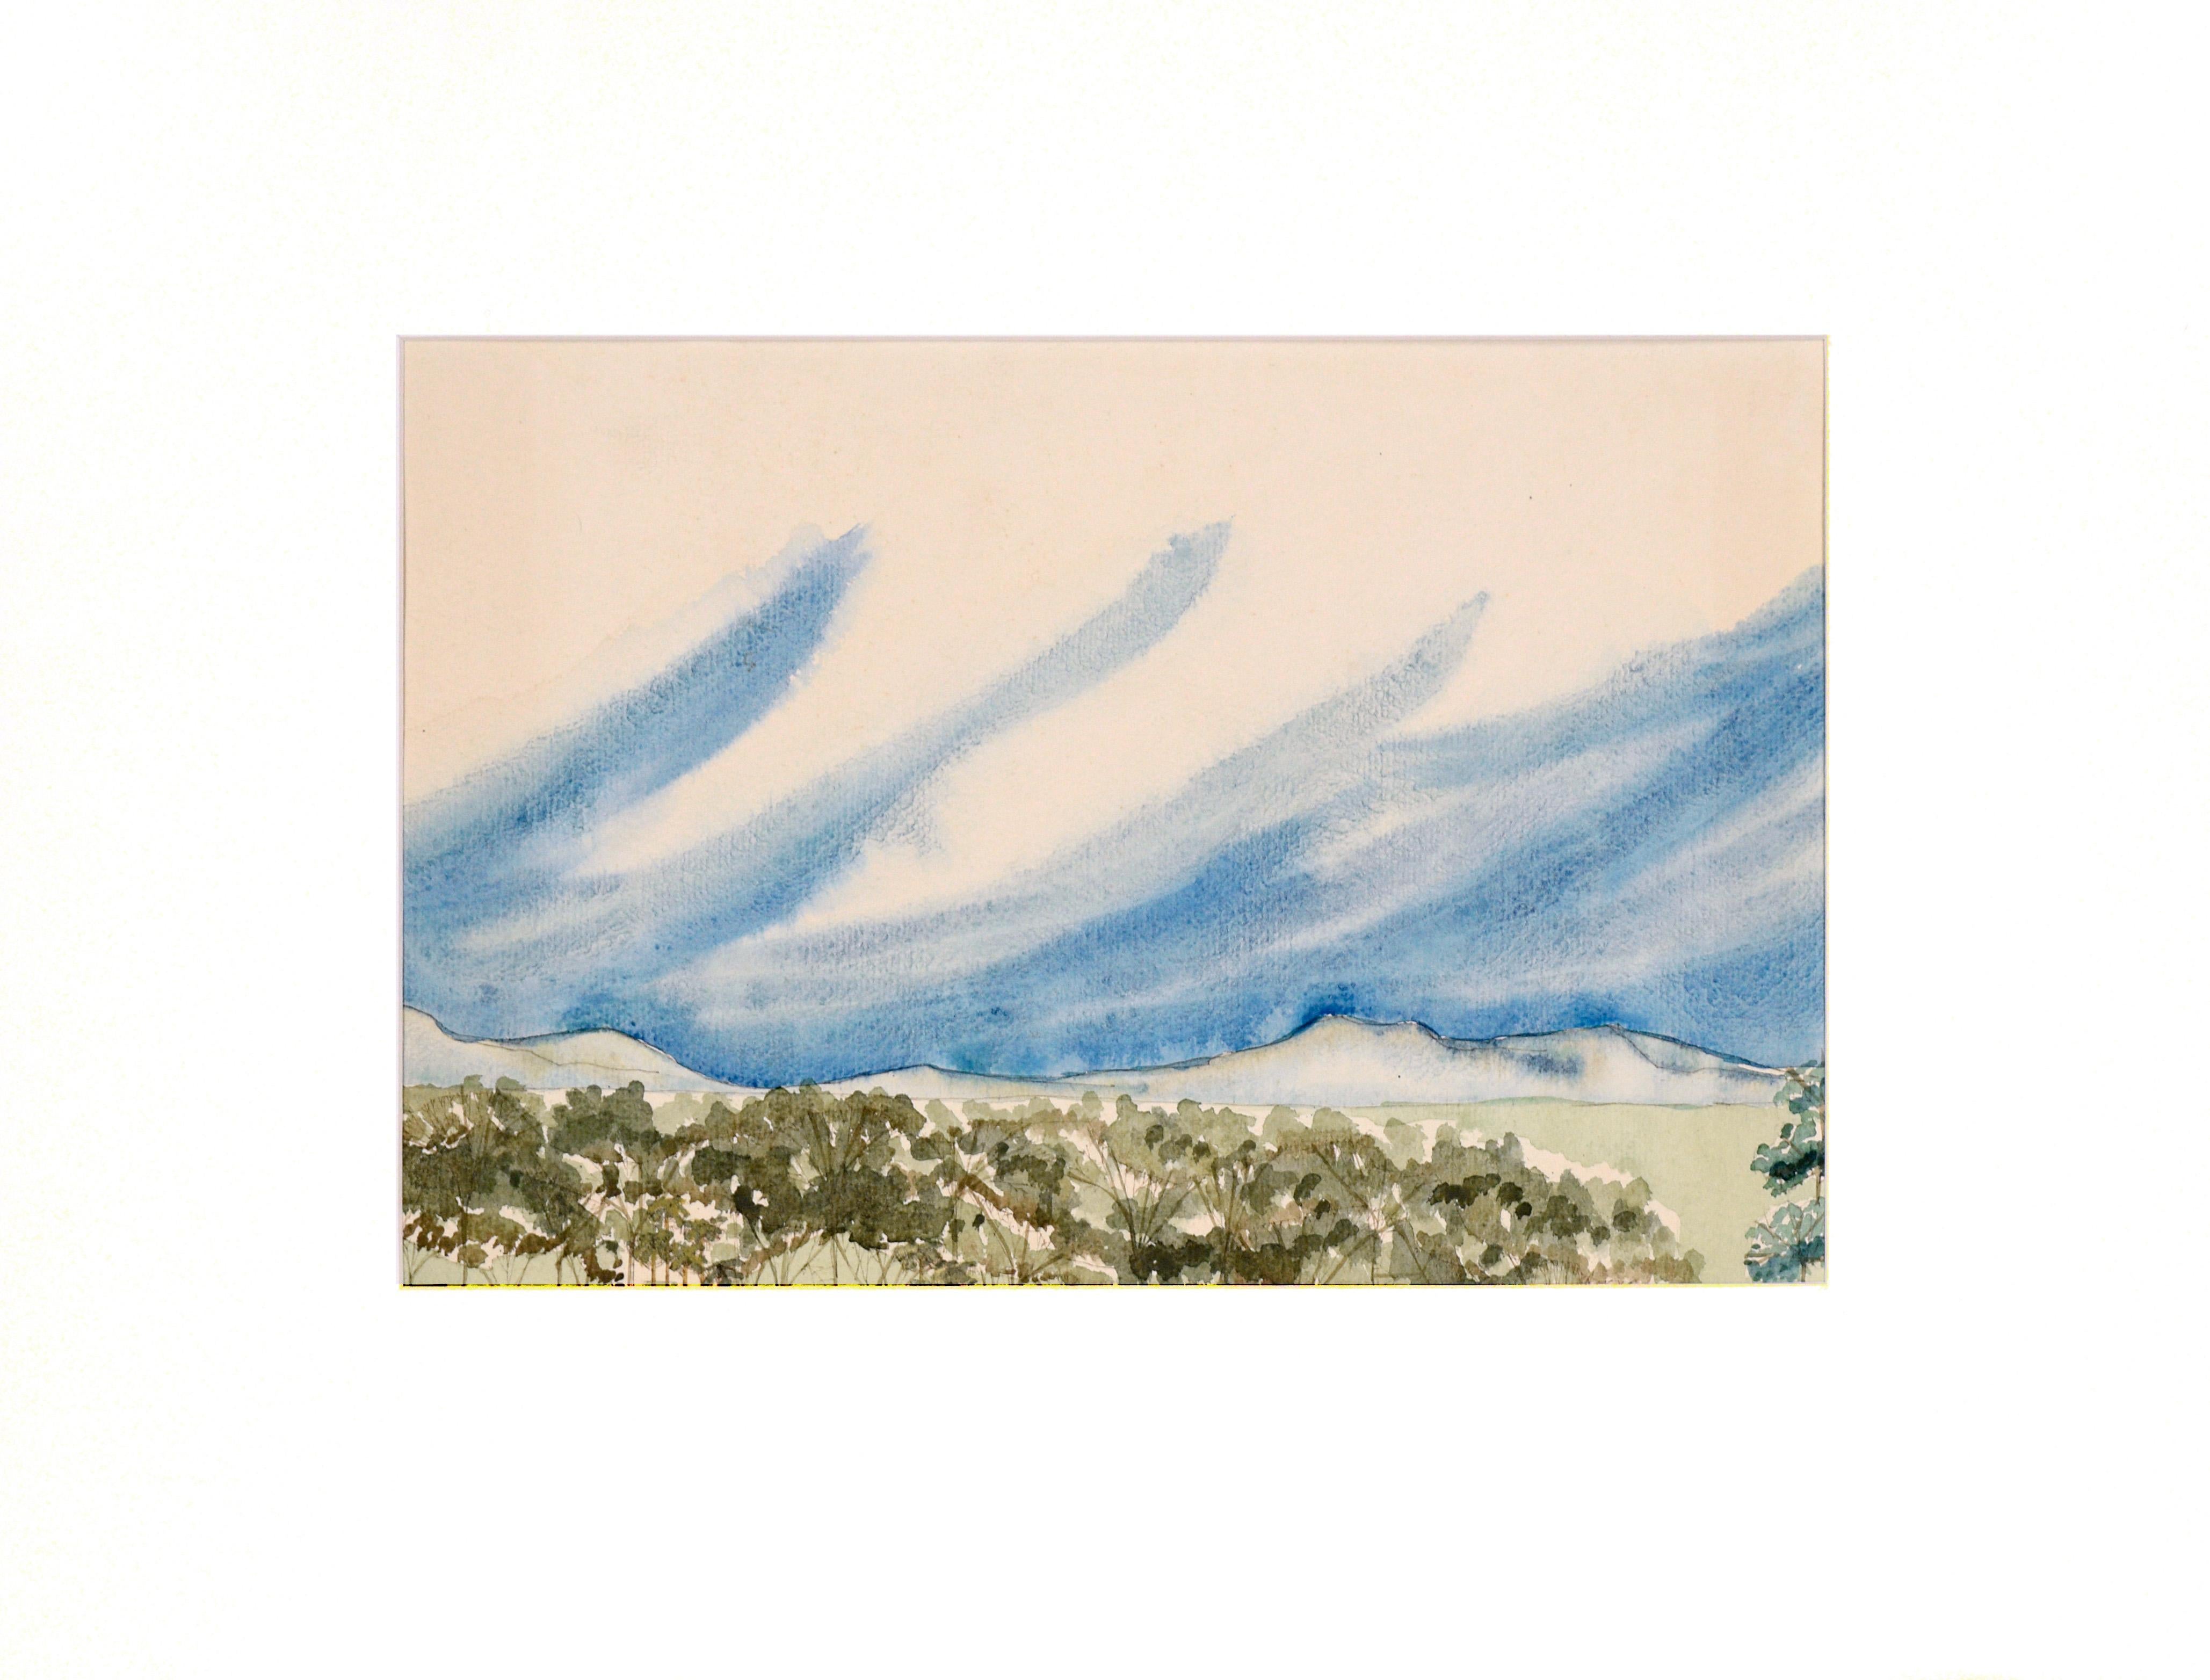 Unknown Landscape Art - "Big Sky Country" - Landscape Original in Watercolor on Paper